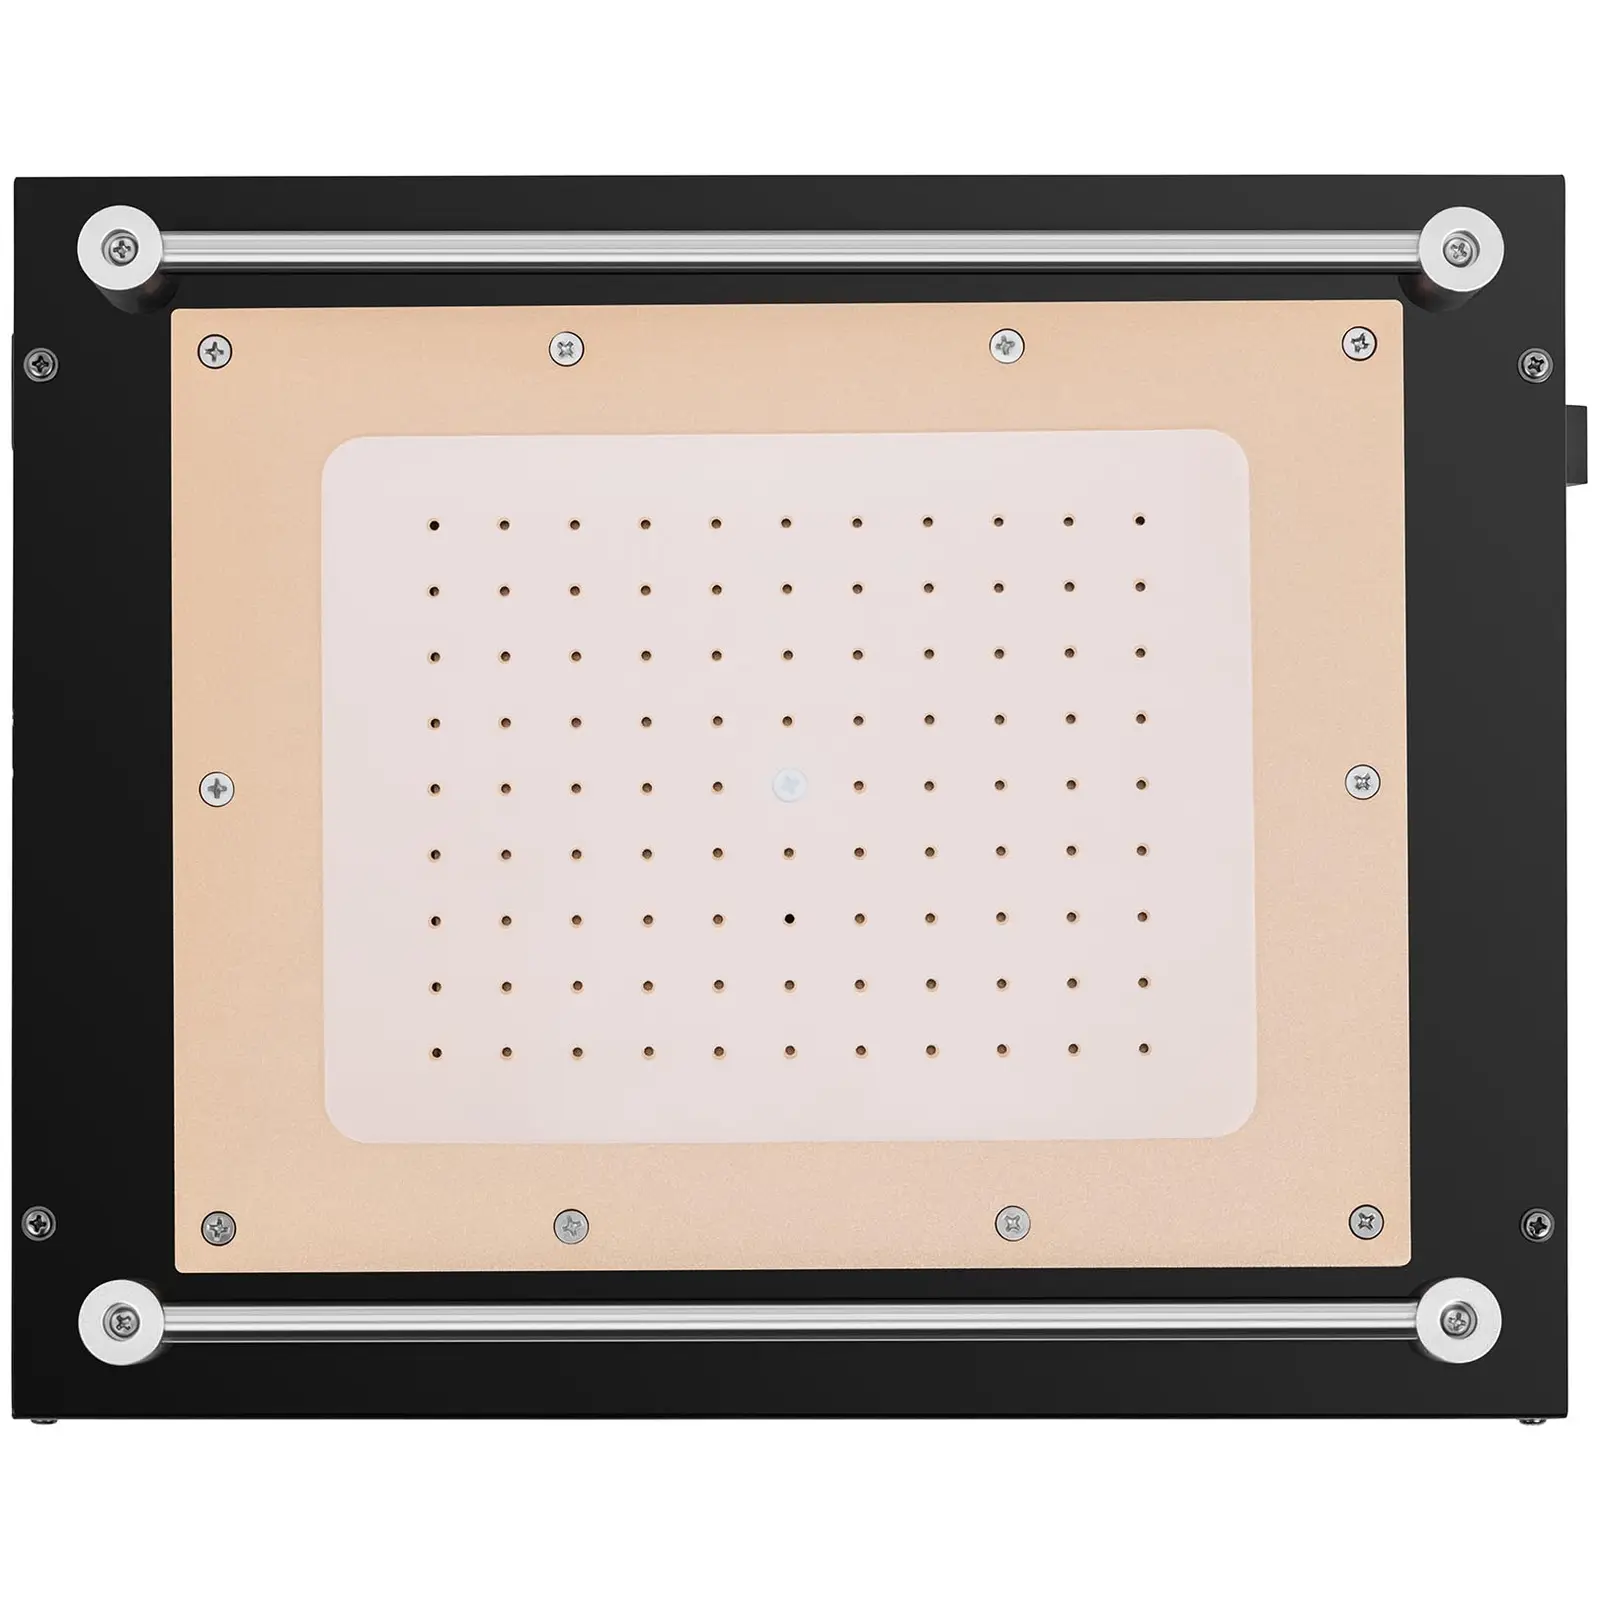 LCD-separator - 12 tommer